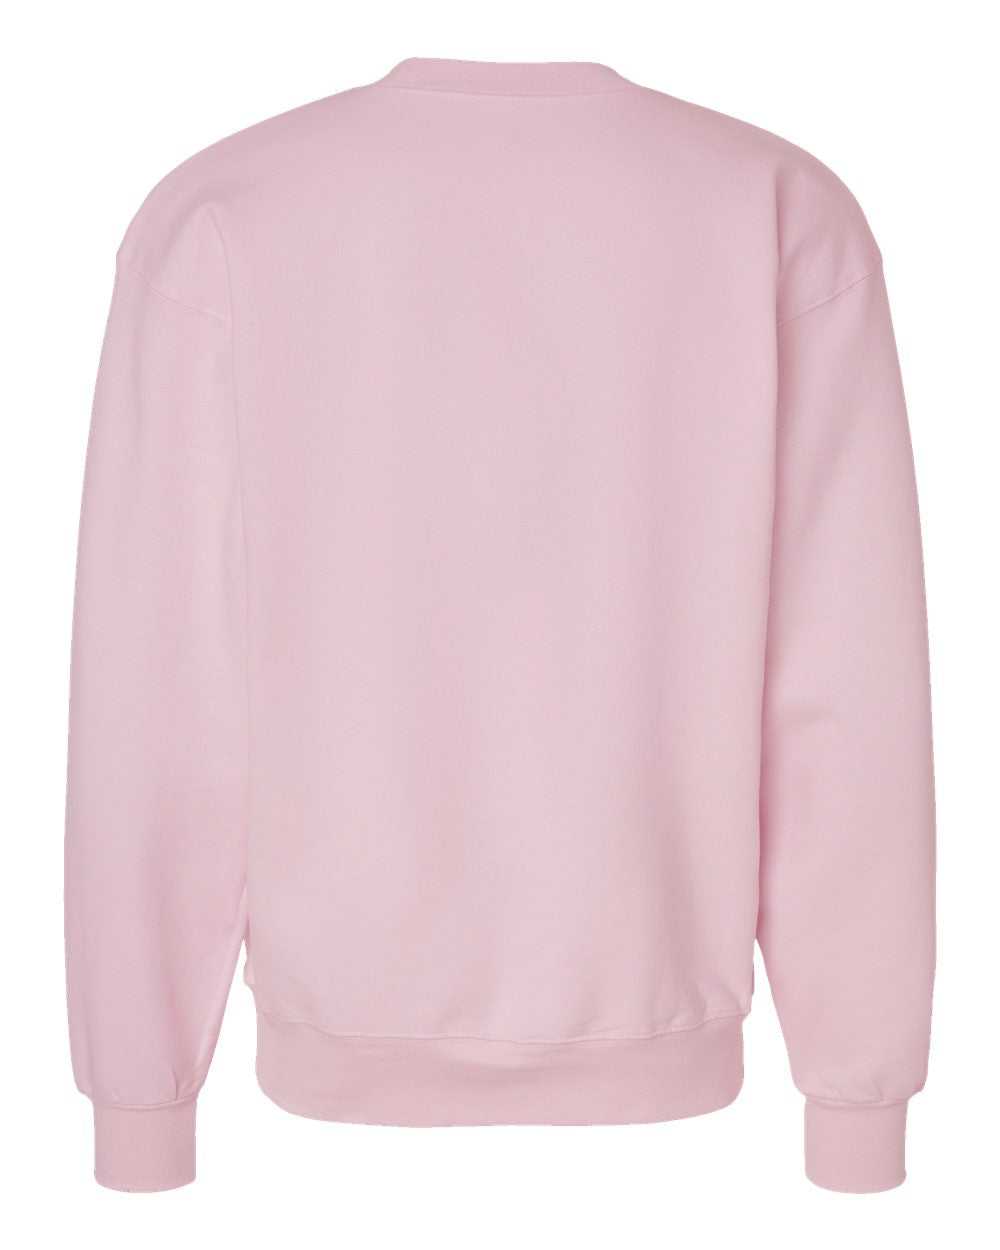 Hanes F260 Ultimate Cotton Crewneck Sweatshirt - Pale Pink - HIT a Double - 6